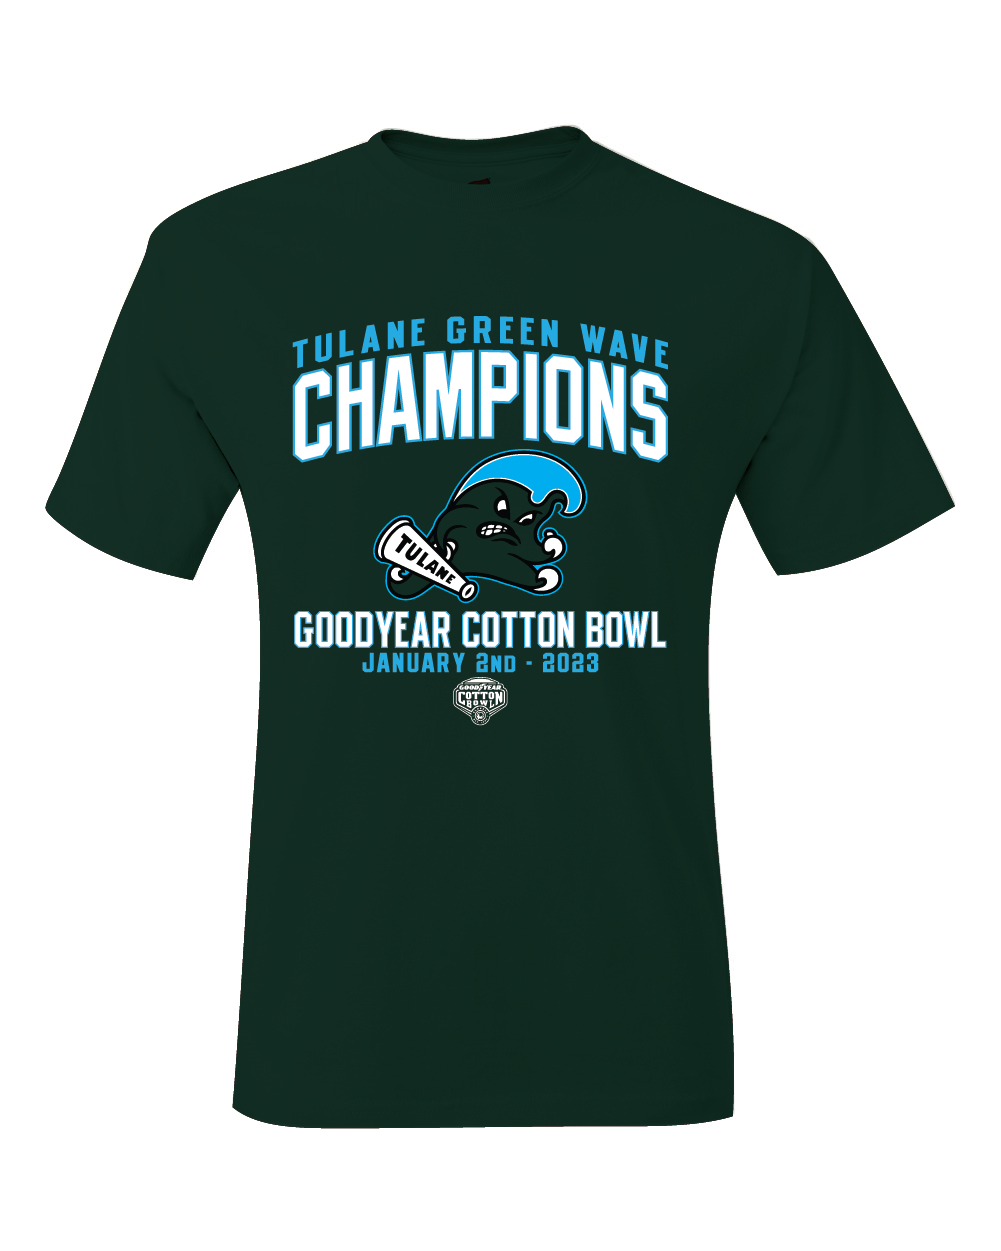 Tulane Green Wave 2023 Cotton Bowl Champions T-Shirt - $20.99 - $24.99